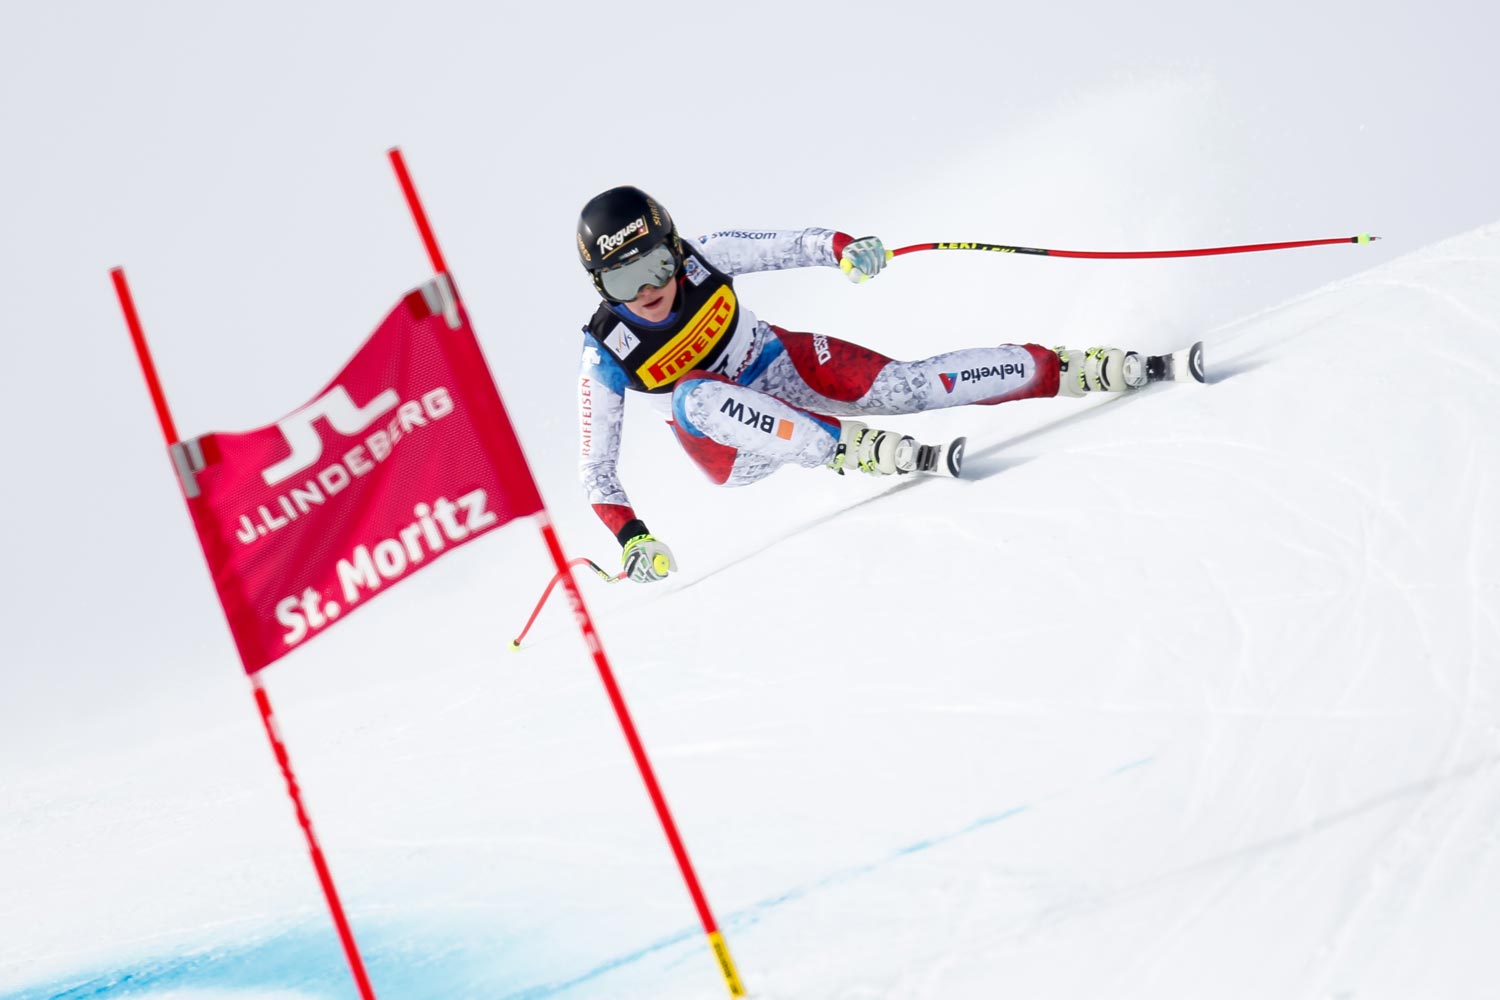 Campeonatos del mundo de esquí alpino 2017 St. Moritz, Super G femenino, Lara Gut